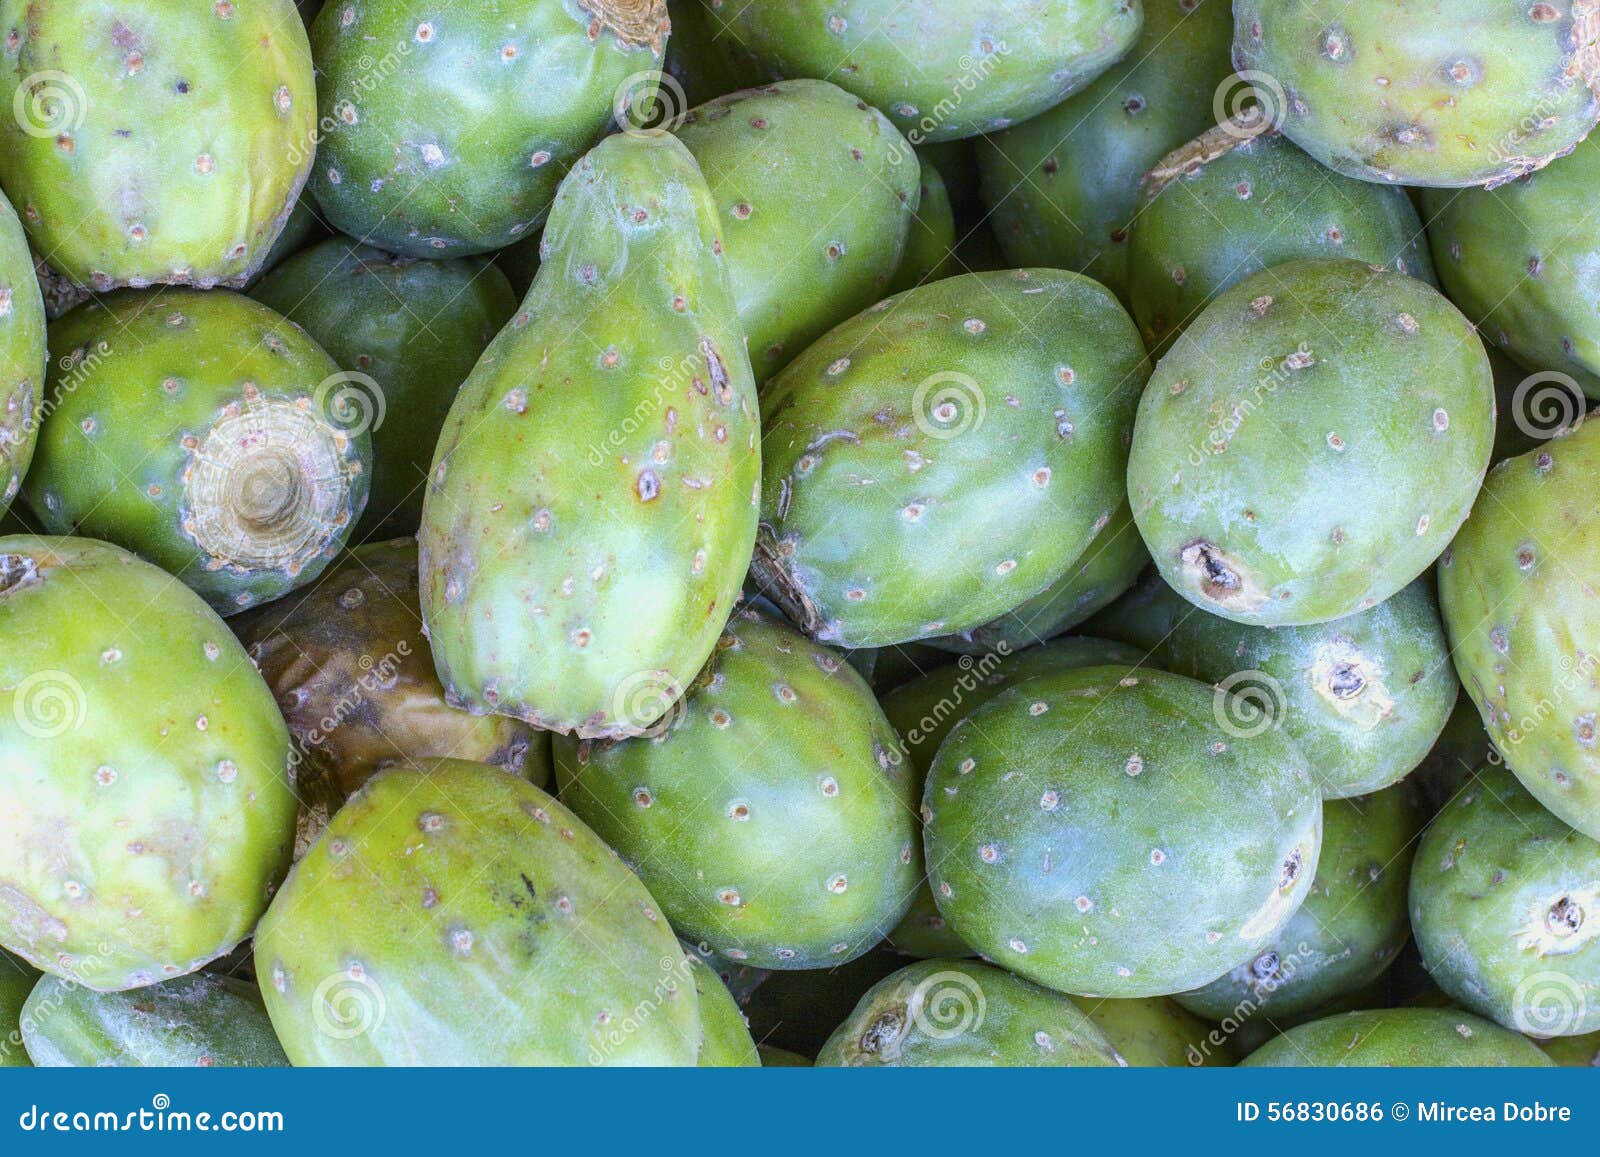 https://thumbs.dreamstime.com/z/frutas-de-la-opuntia-ficus-indica-fruta-del-cactus-atn-en-un-mercado-en-per-mirada-natural-cierre-encima-de-la-macro-56830686.jpg